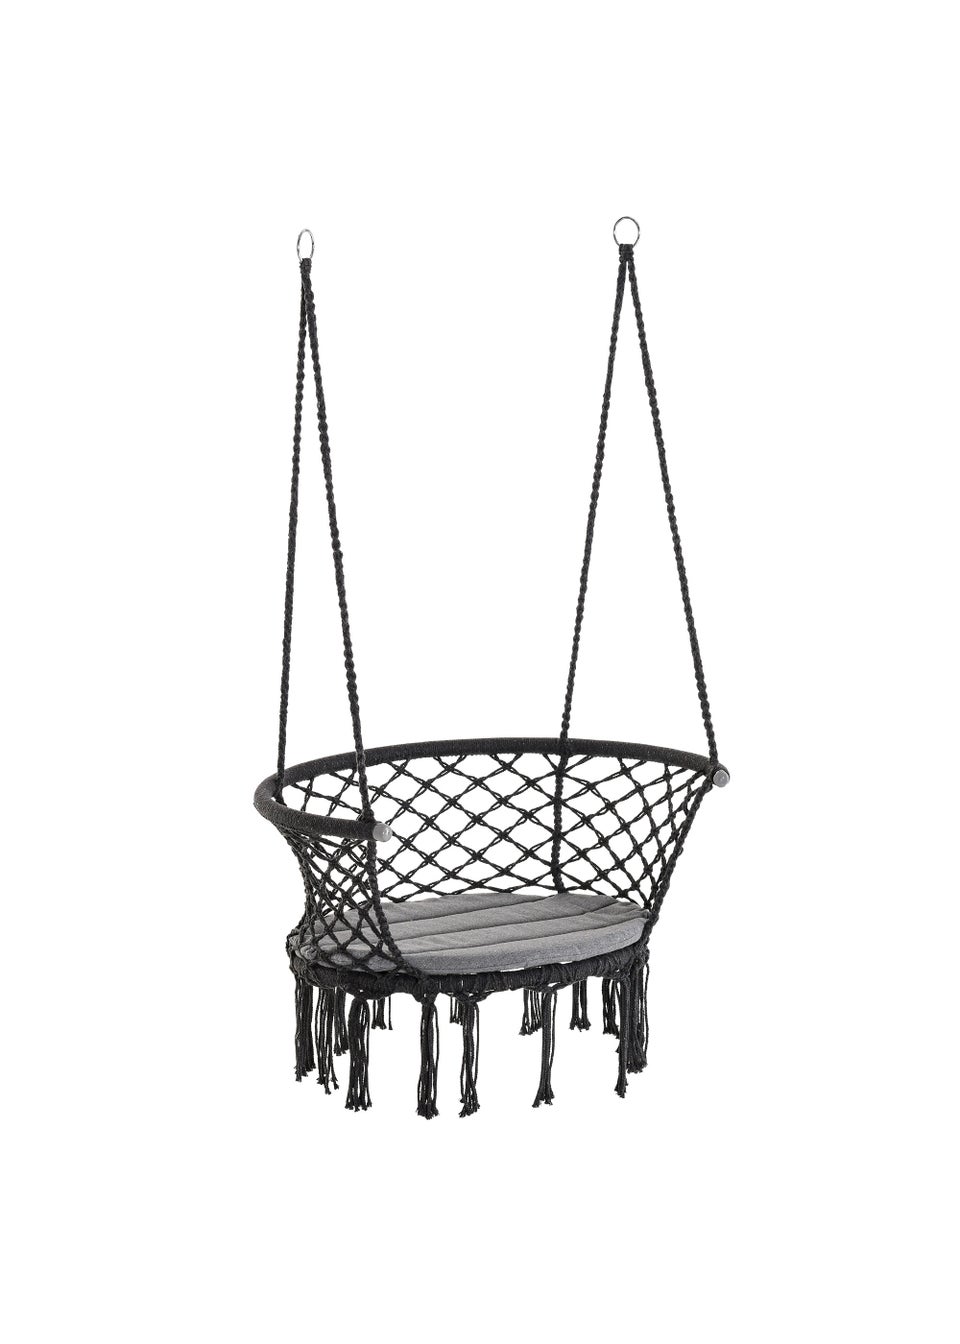 Outsunny Hanging Hammock Chair (80cm x 60cm x 36cm)